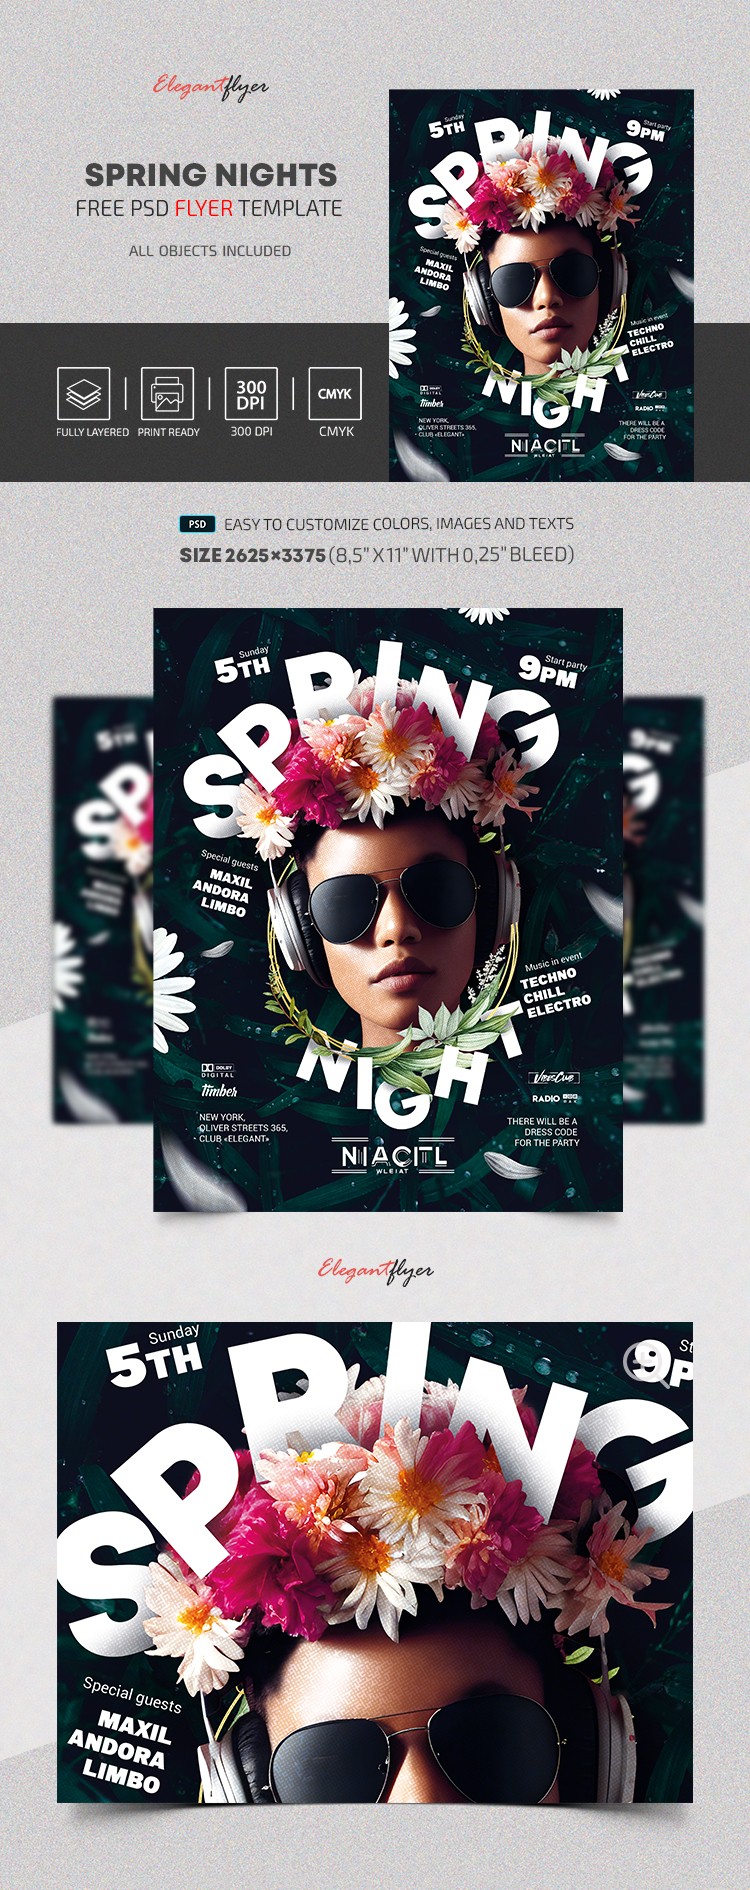 Spring Nights - Free Flyer PSD Template by ElegantFlyer